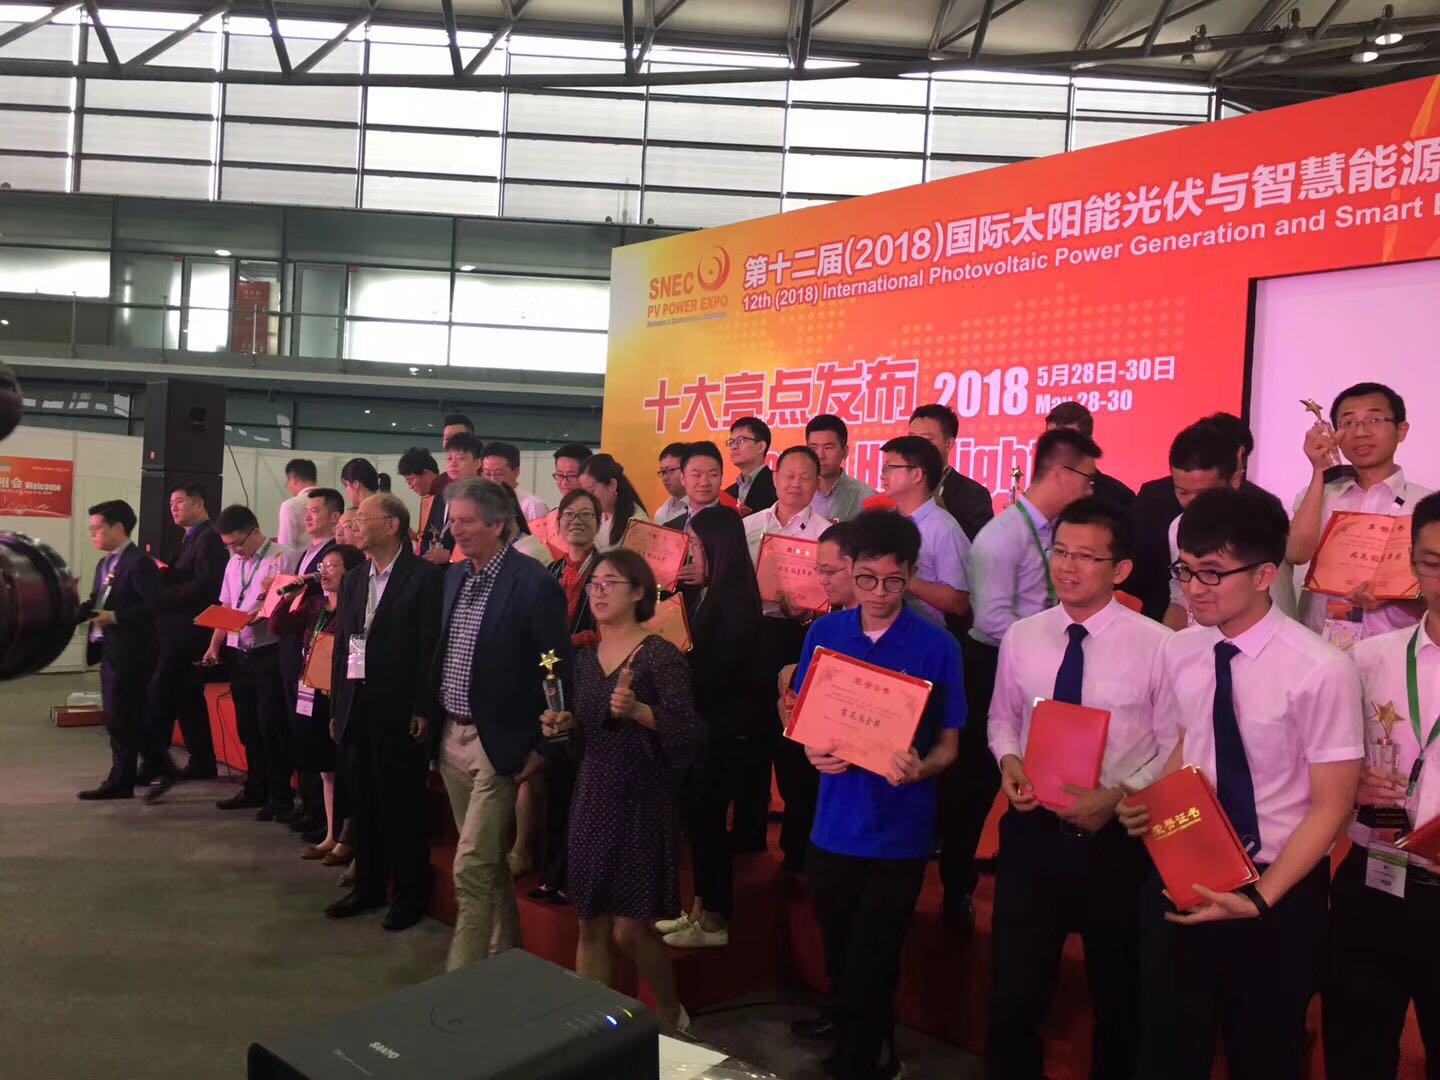 SNEC*十二届 2018 国际太阳能光伏与智慧能源 上海 大会暨展览会